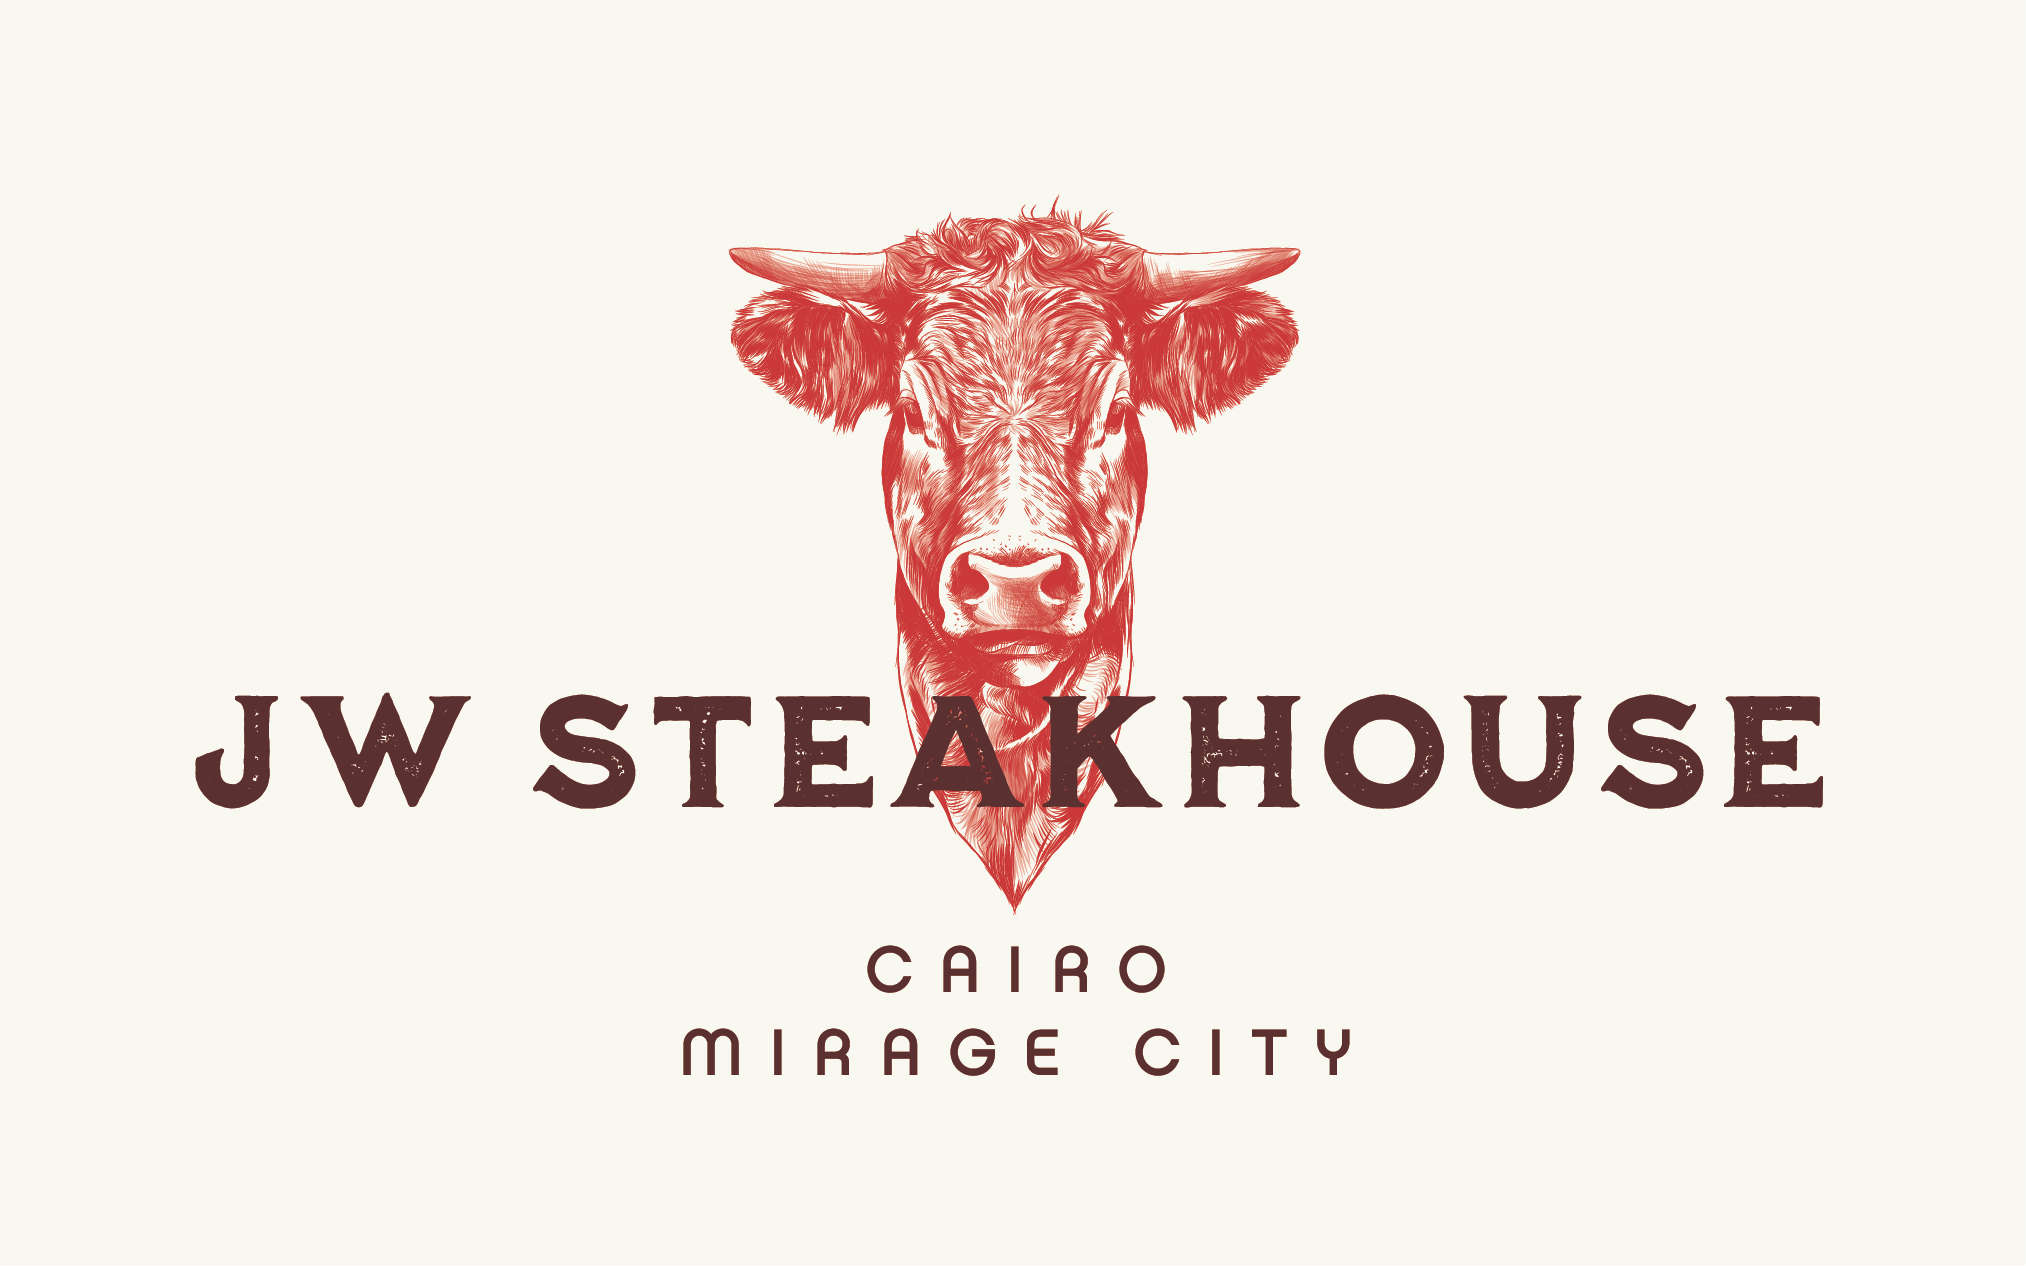 JW Steakhouse Cairo Mirage City